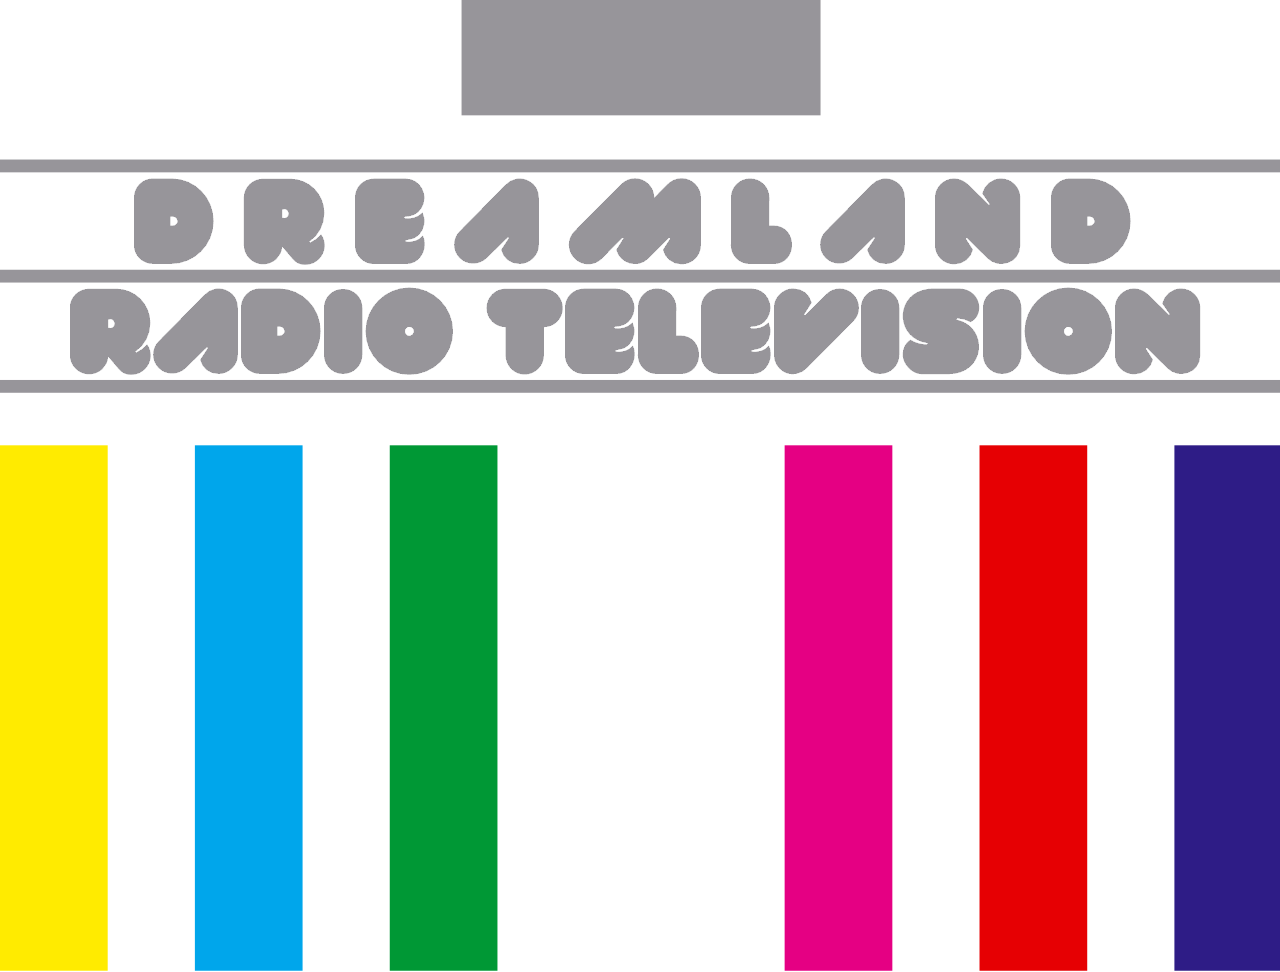 1280px-Emblem_of__Dreamland_Radio_Television.png